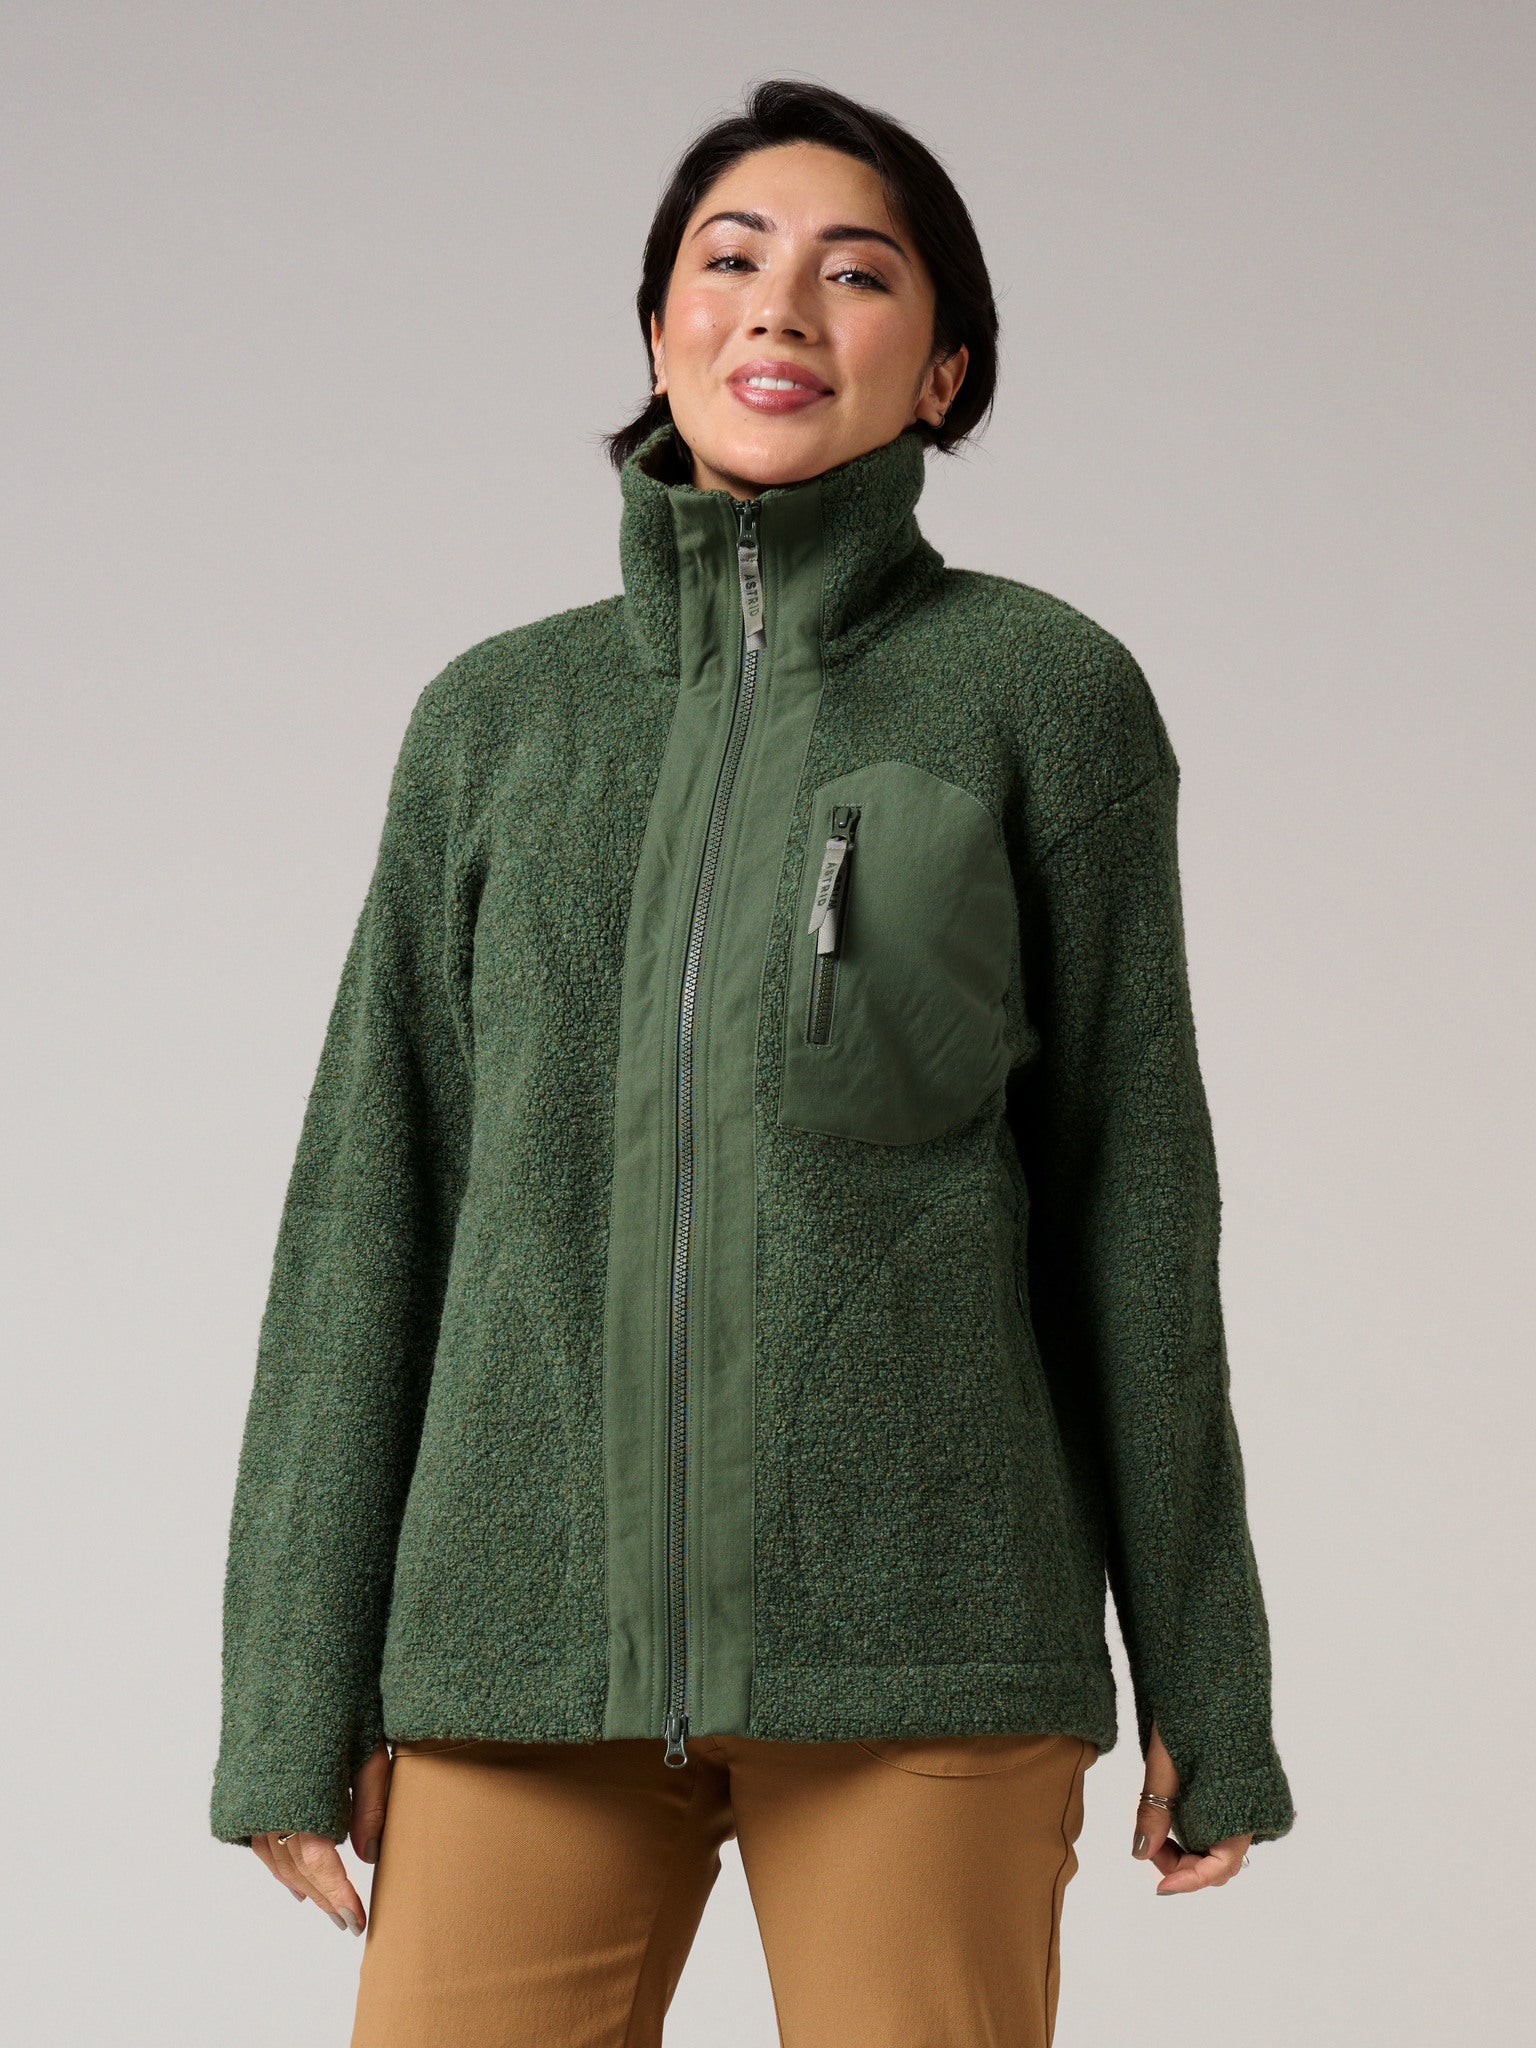 Astrid Plus Size Winter Jacket Women Faux Fur Stitching High